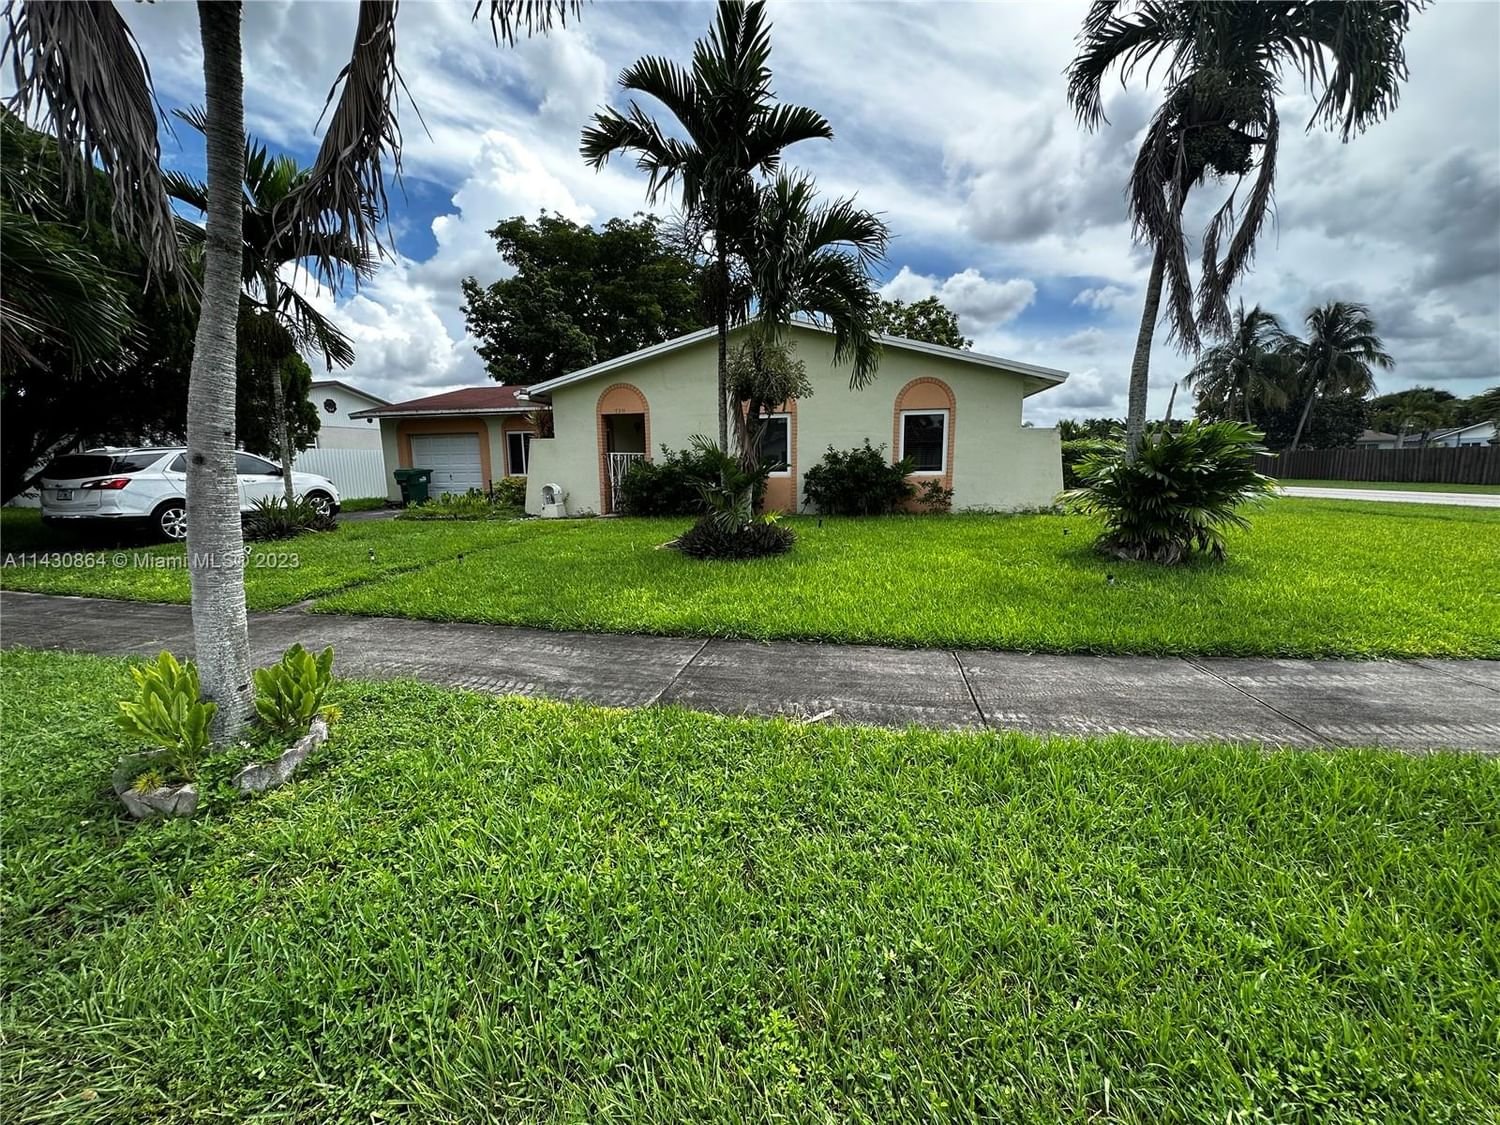 Real estate property located at 7311 130th Ave, Miami-Dade County, WINSTON PARK UNIT THREE, Miami, FL